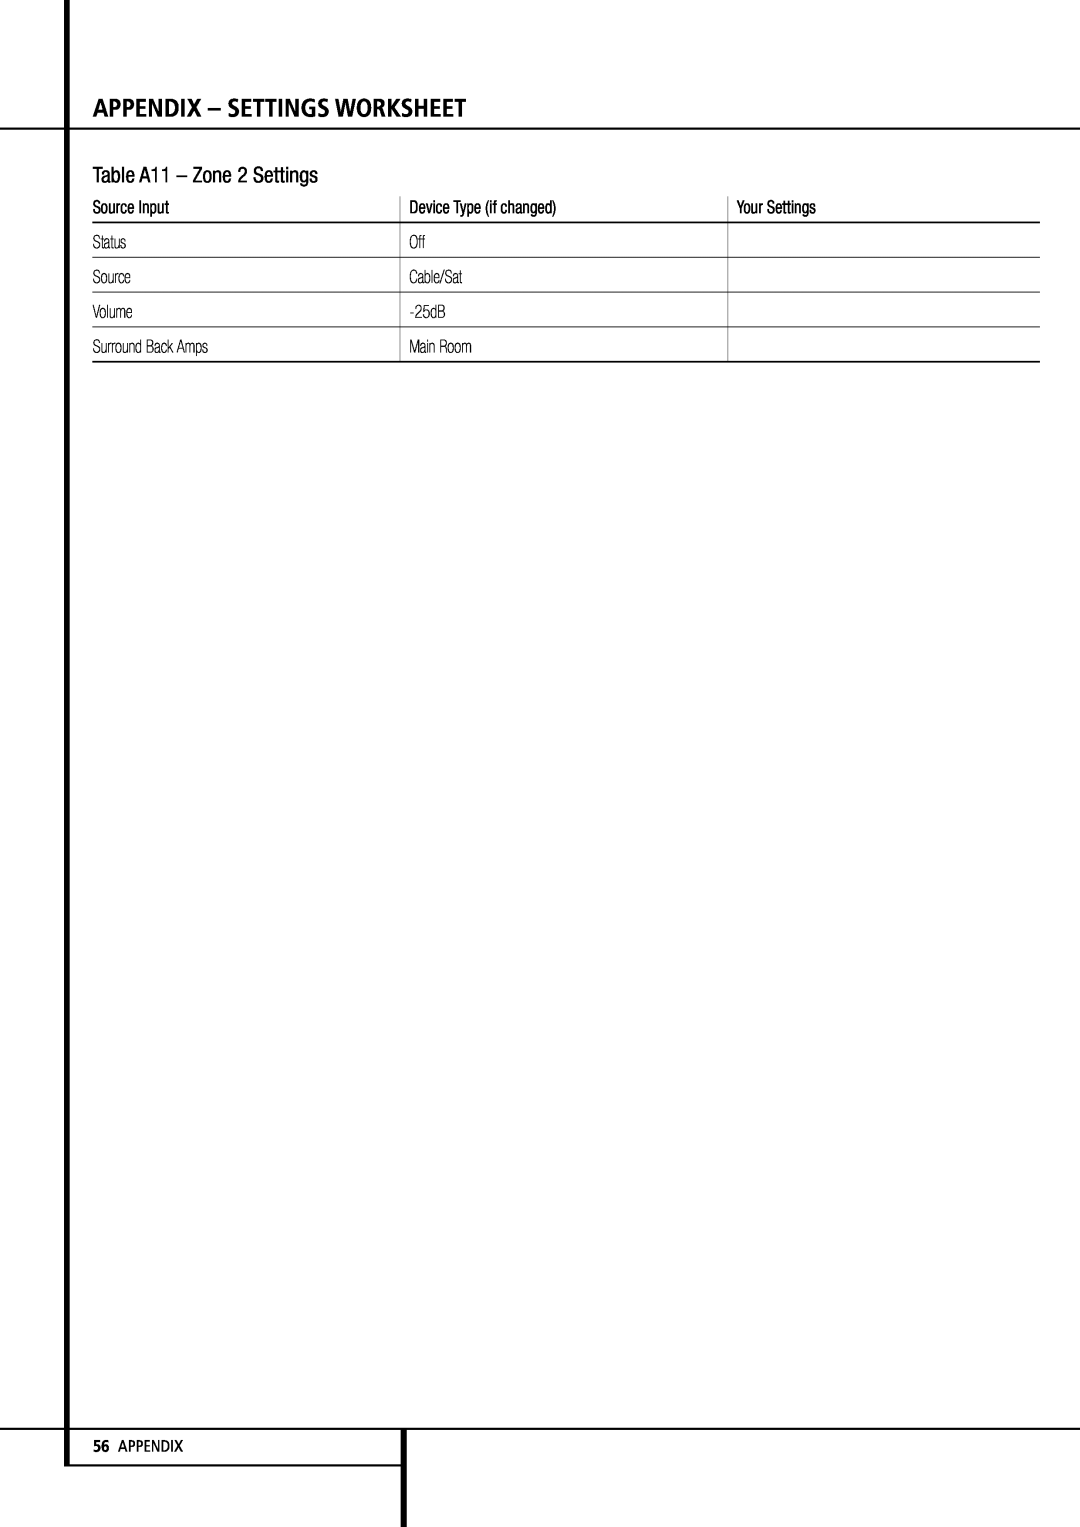 Harman-Kardon AVR 355 Appendix – Settings Worksheet, Table A11 – Zone 2 Settings, Source Input, Device Type if changed 